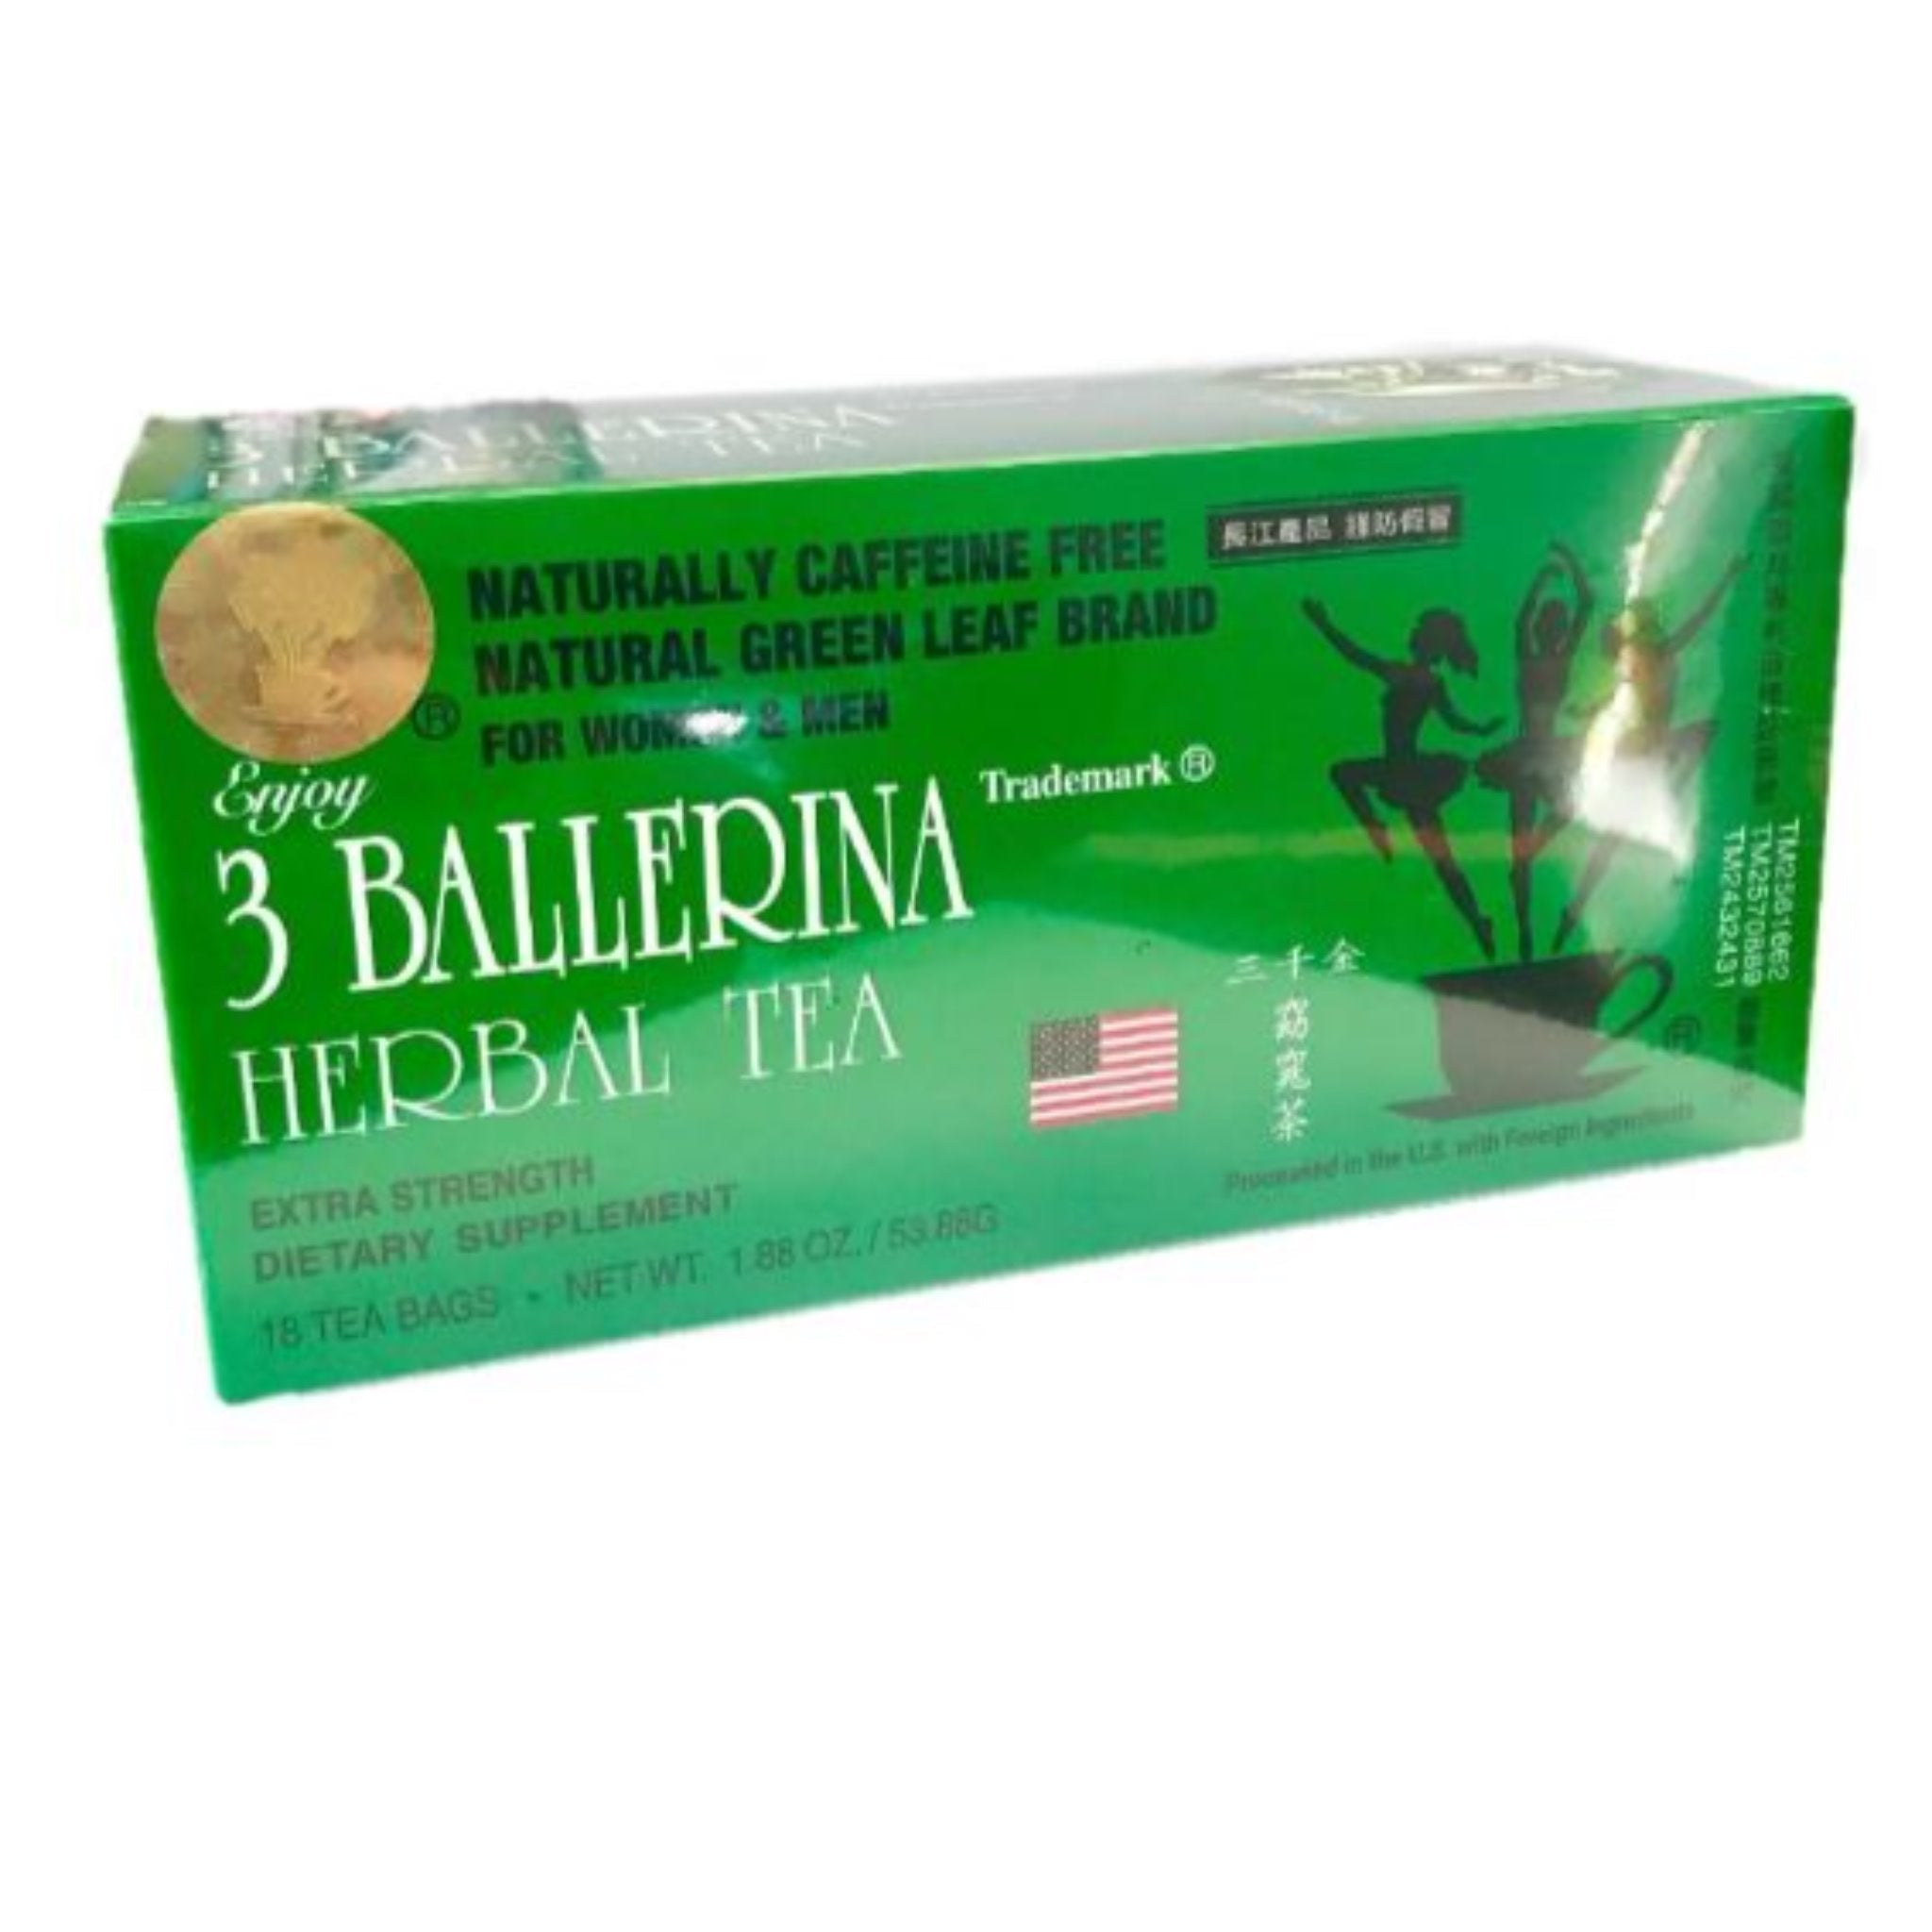 Teas 3 Ballerina Herbal Tea x 18 bags (1.88 oz)